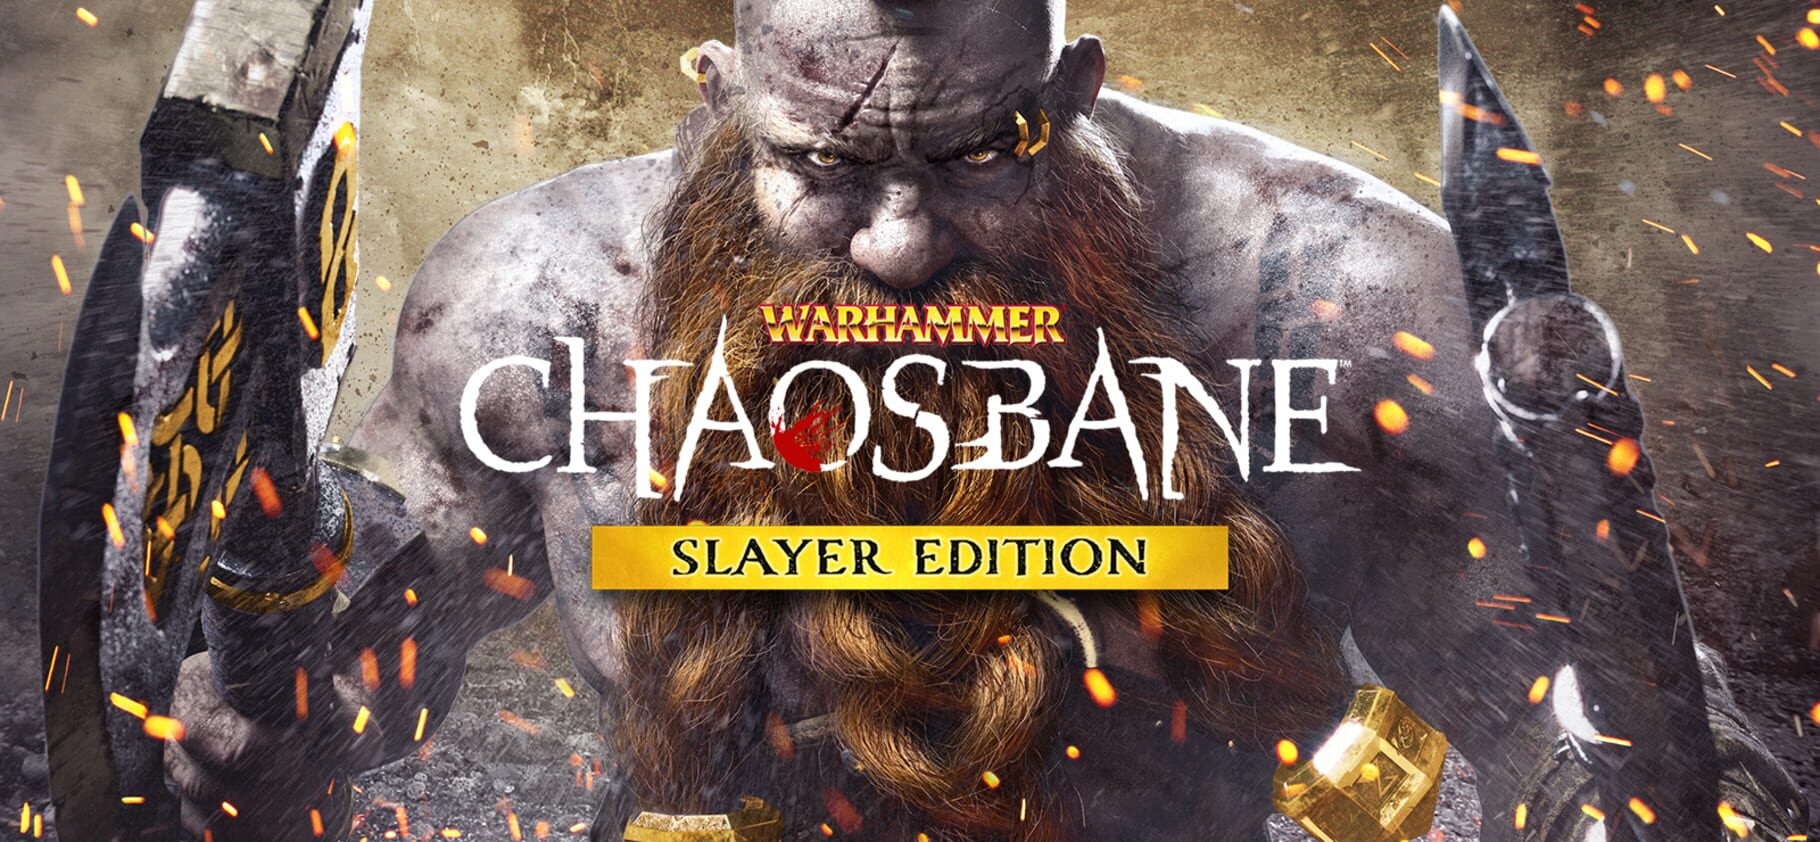 Arte - Warhammer: Chaosbane - Slayer Edition